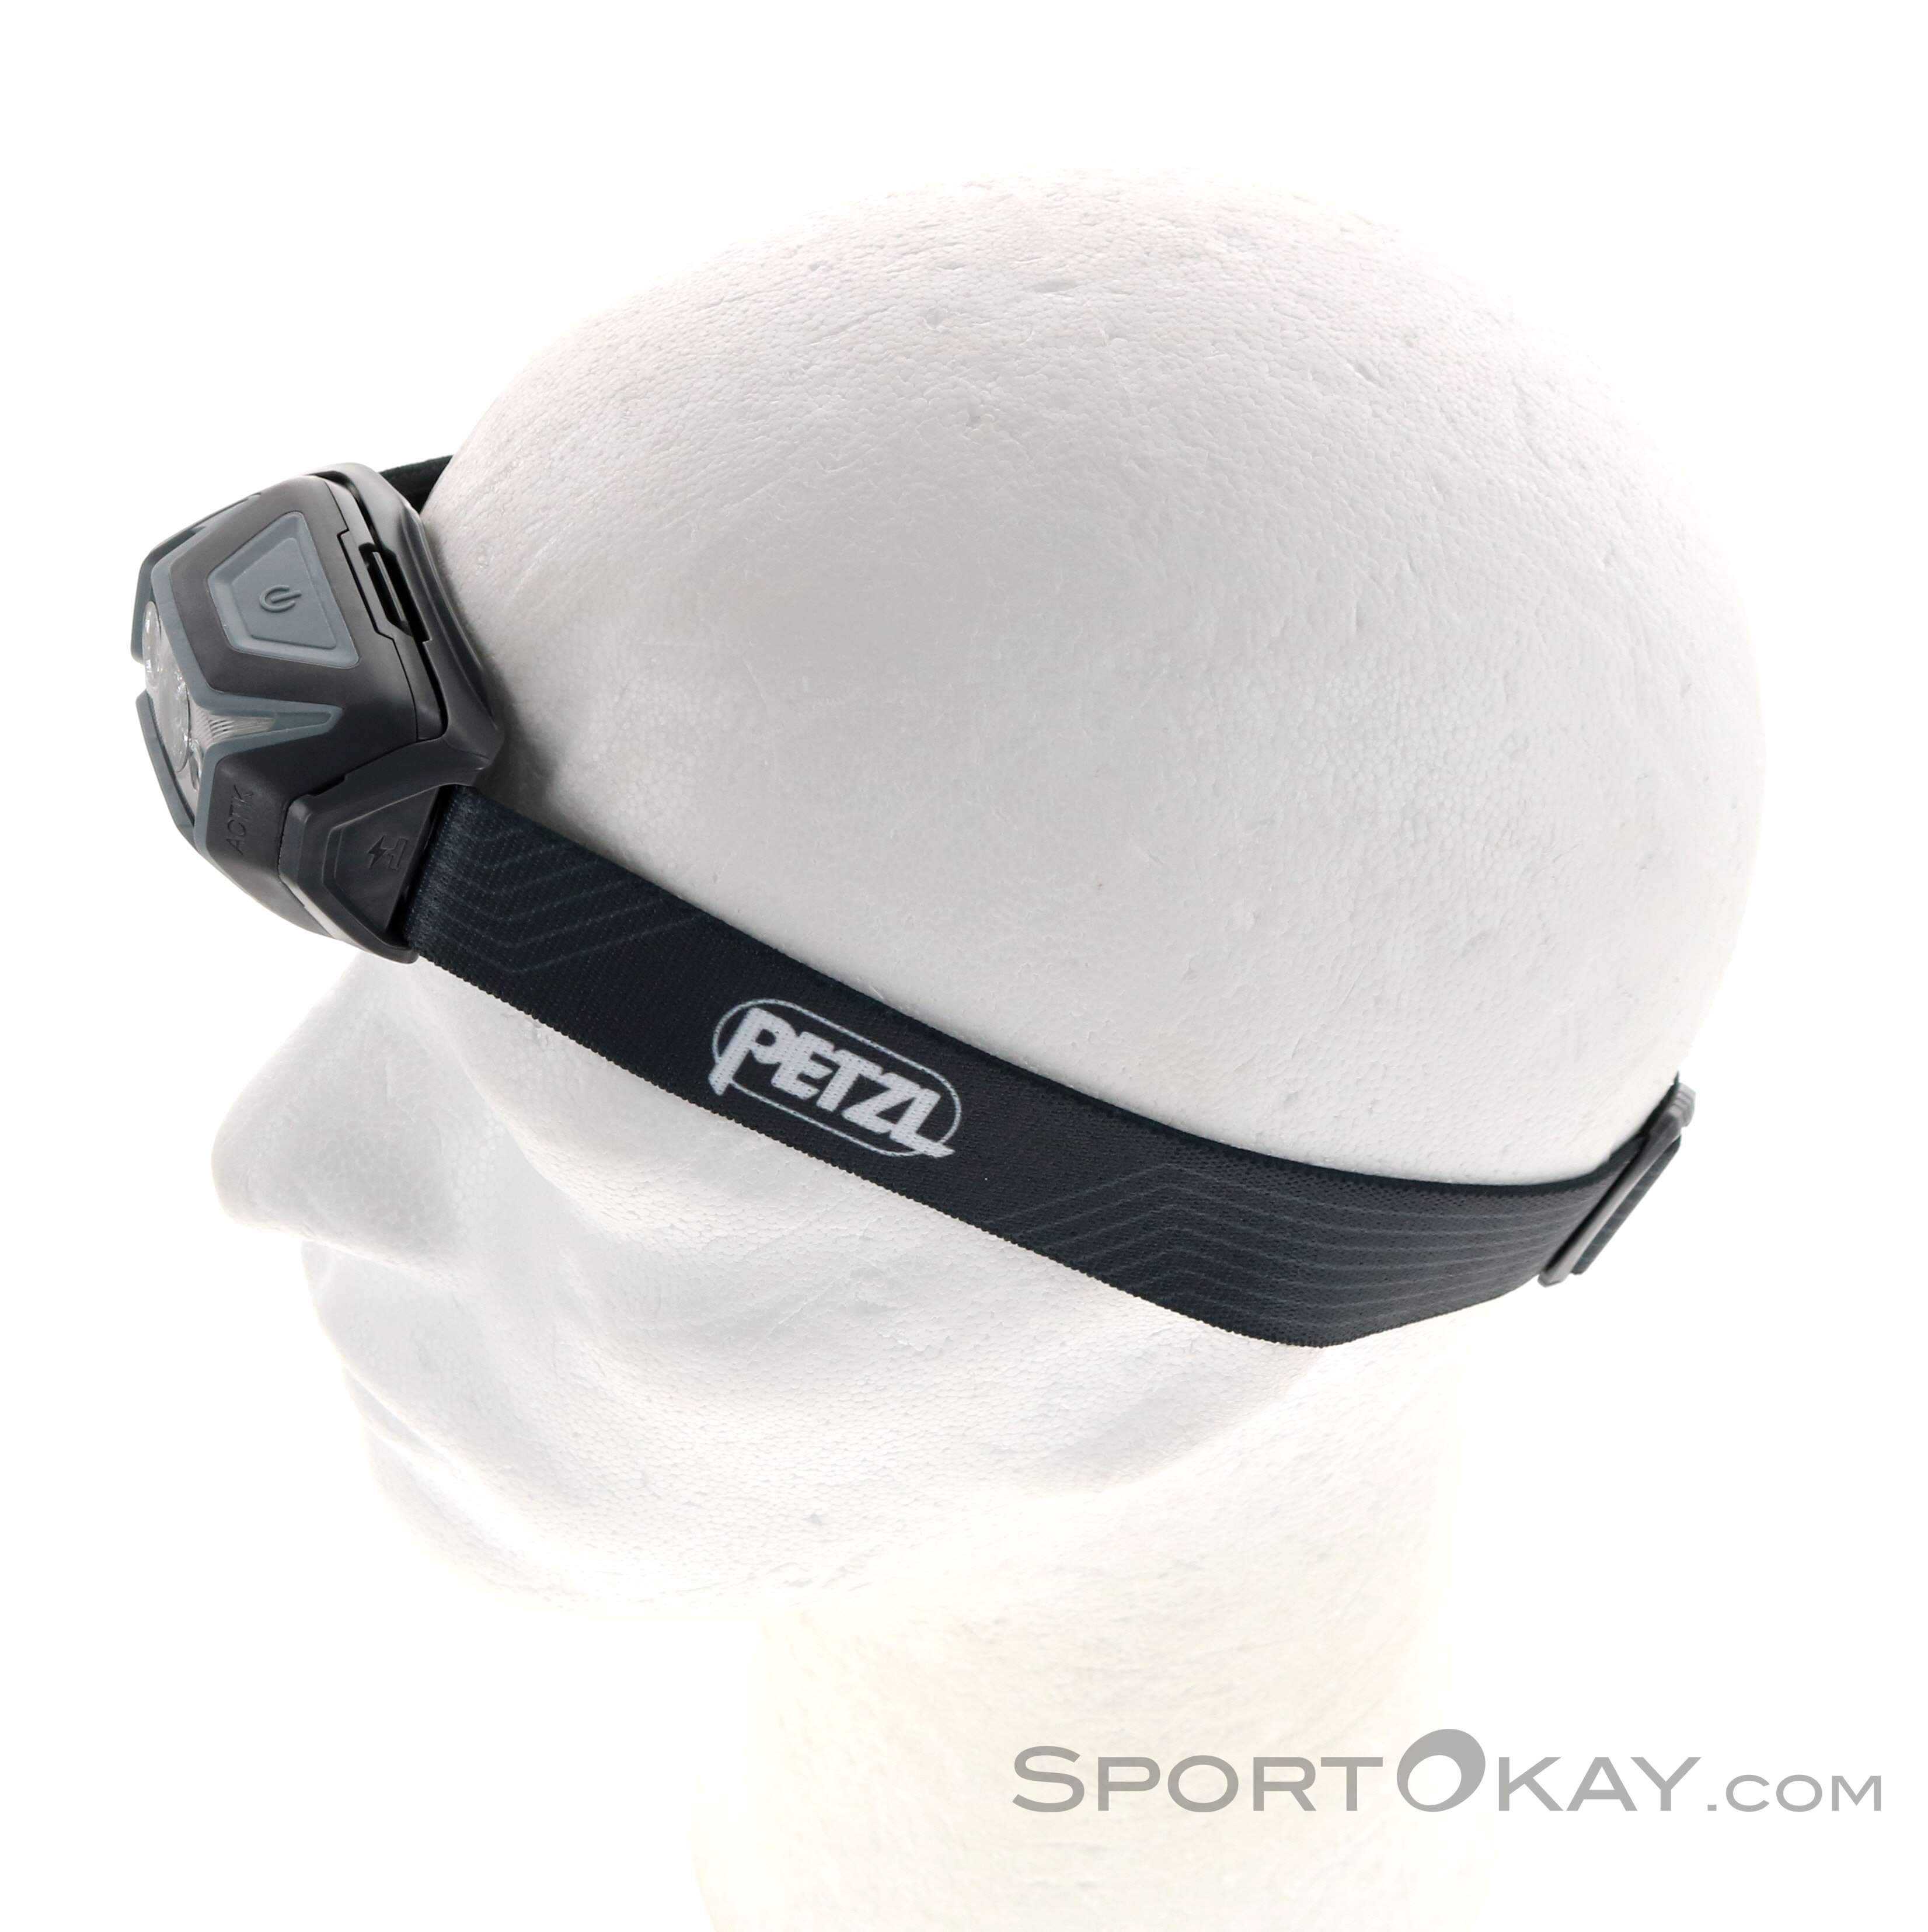 PETZL Unisex -Adult's Stirnlampe Actik Core Schwarz Lamp, Black, Onesize :  : Sports & Outdoors